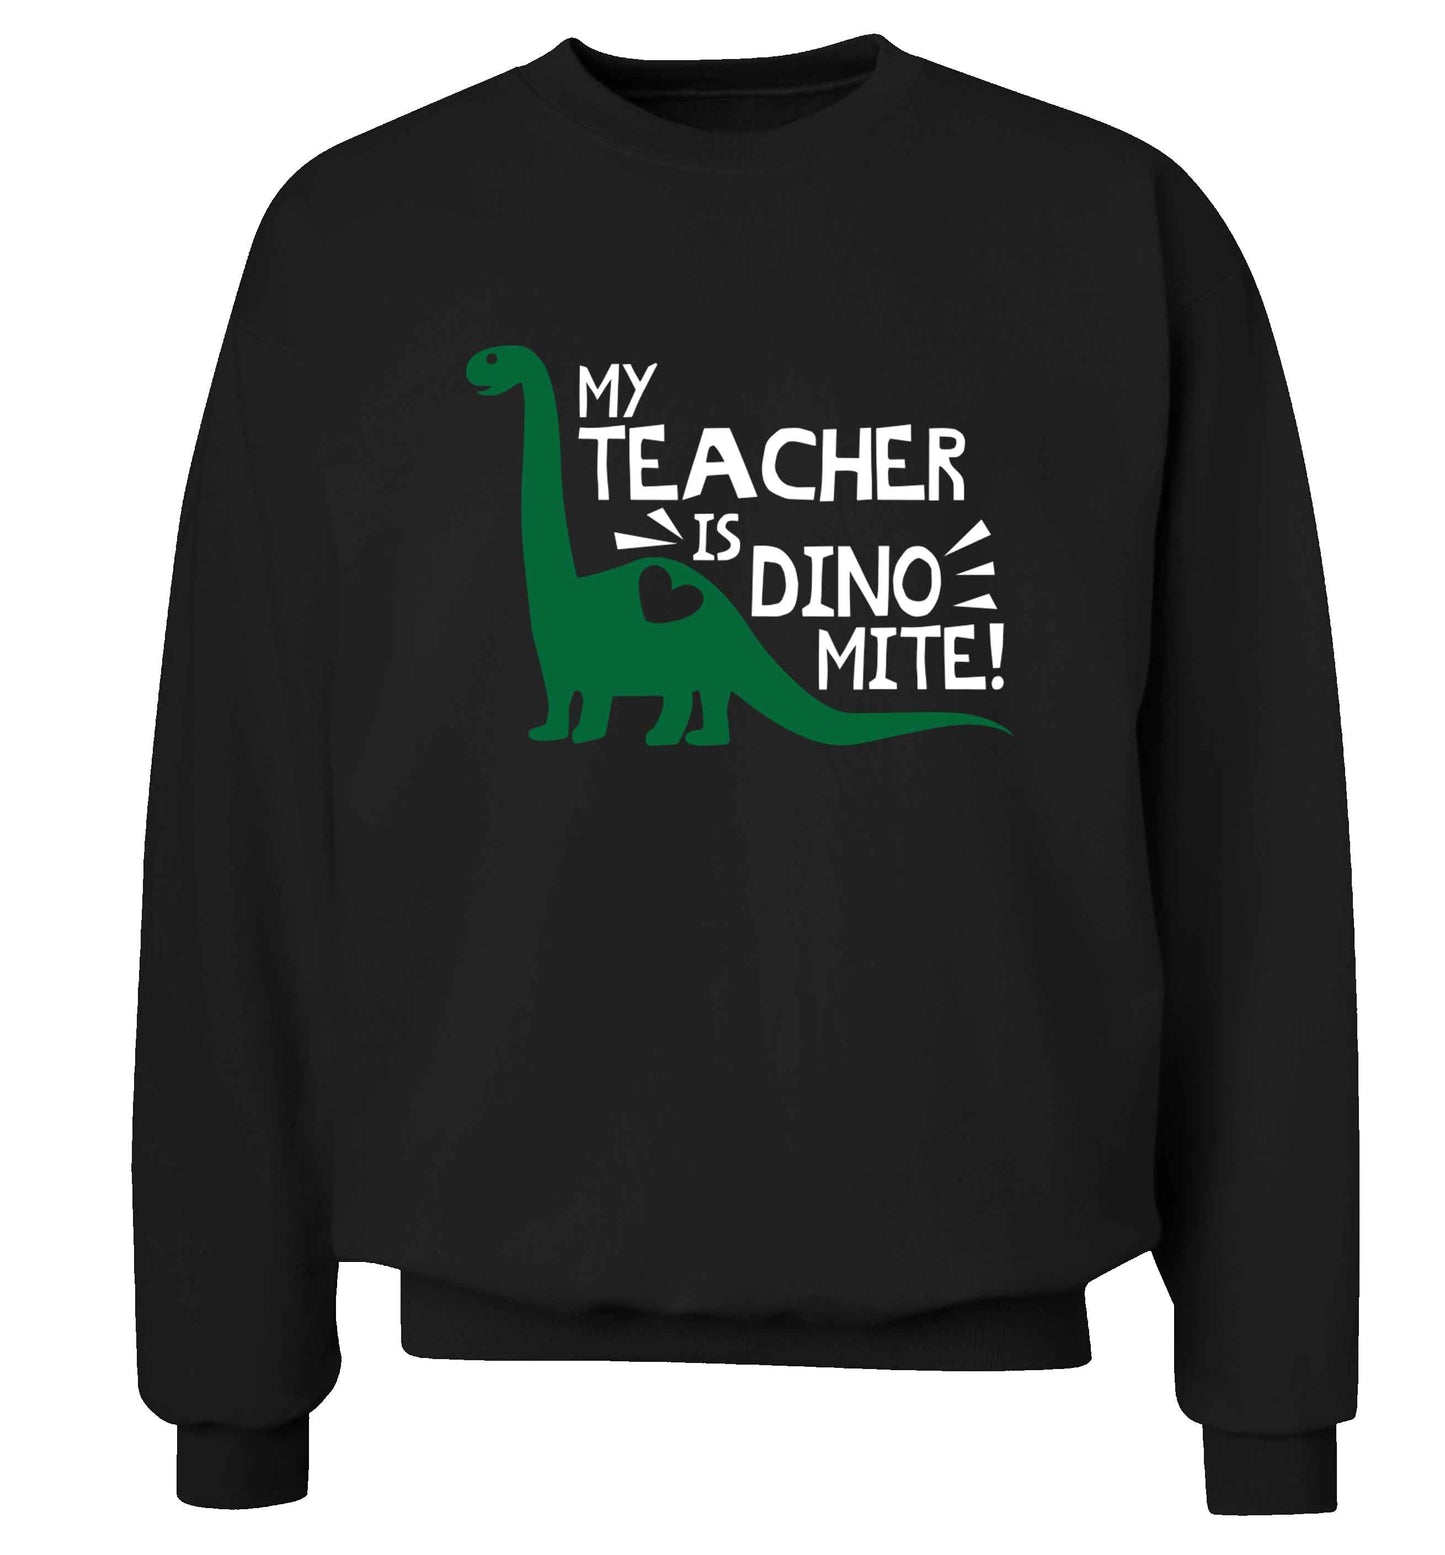 My teacher is dinomite! Adult's unisex black Sweater 2XL